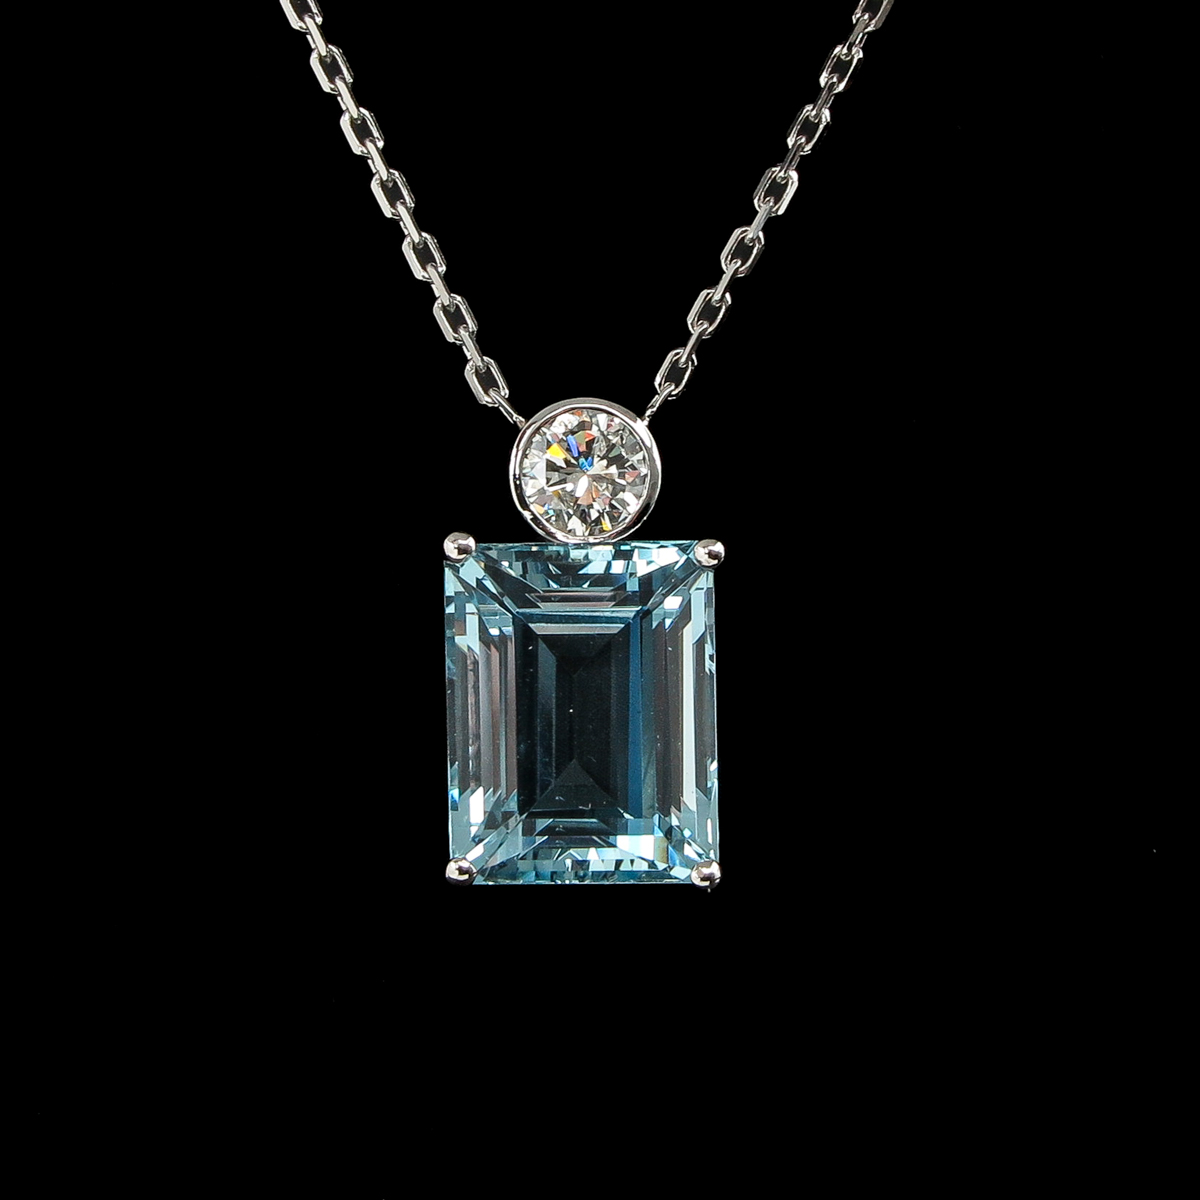 A Necklace with Emerald Cut Aquamarine and Diamond Pendant